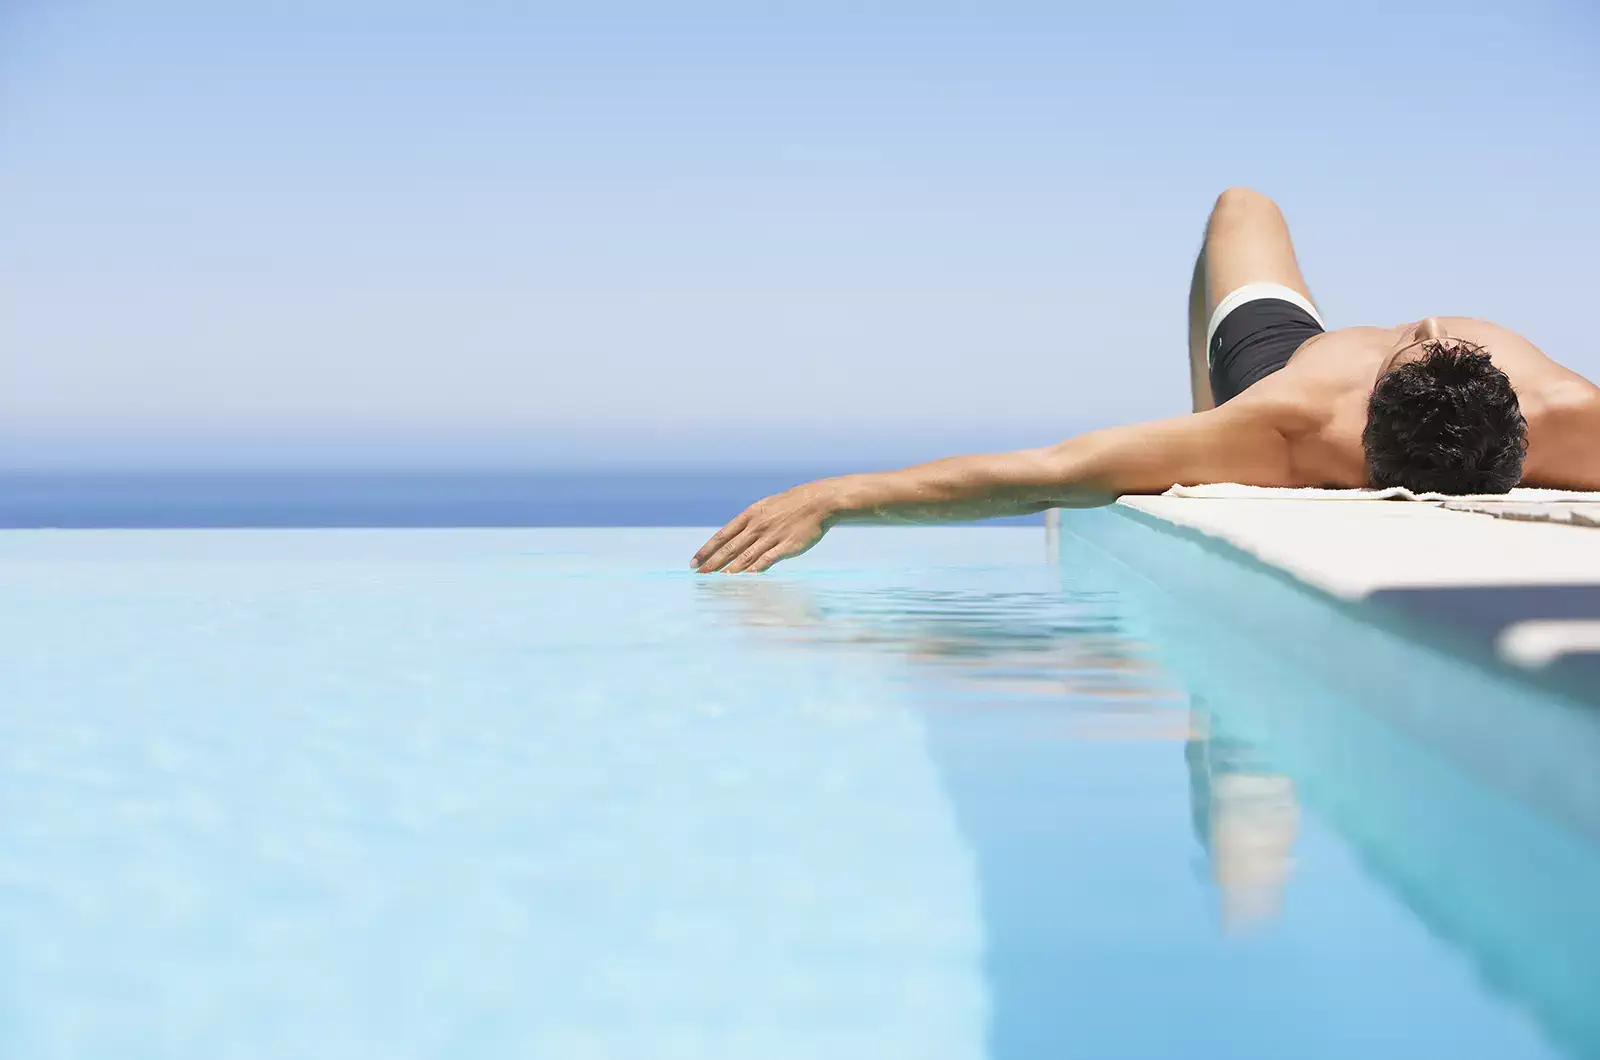 Why a backyard fiberglass pool is better than a beach vacation